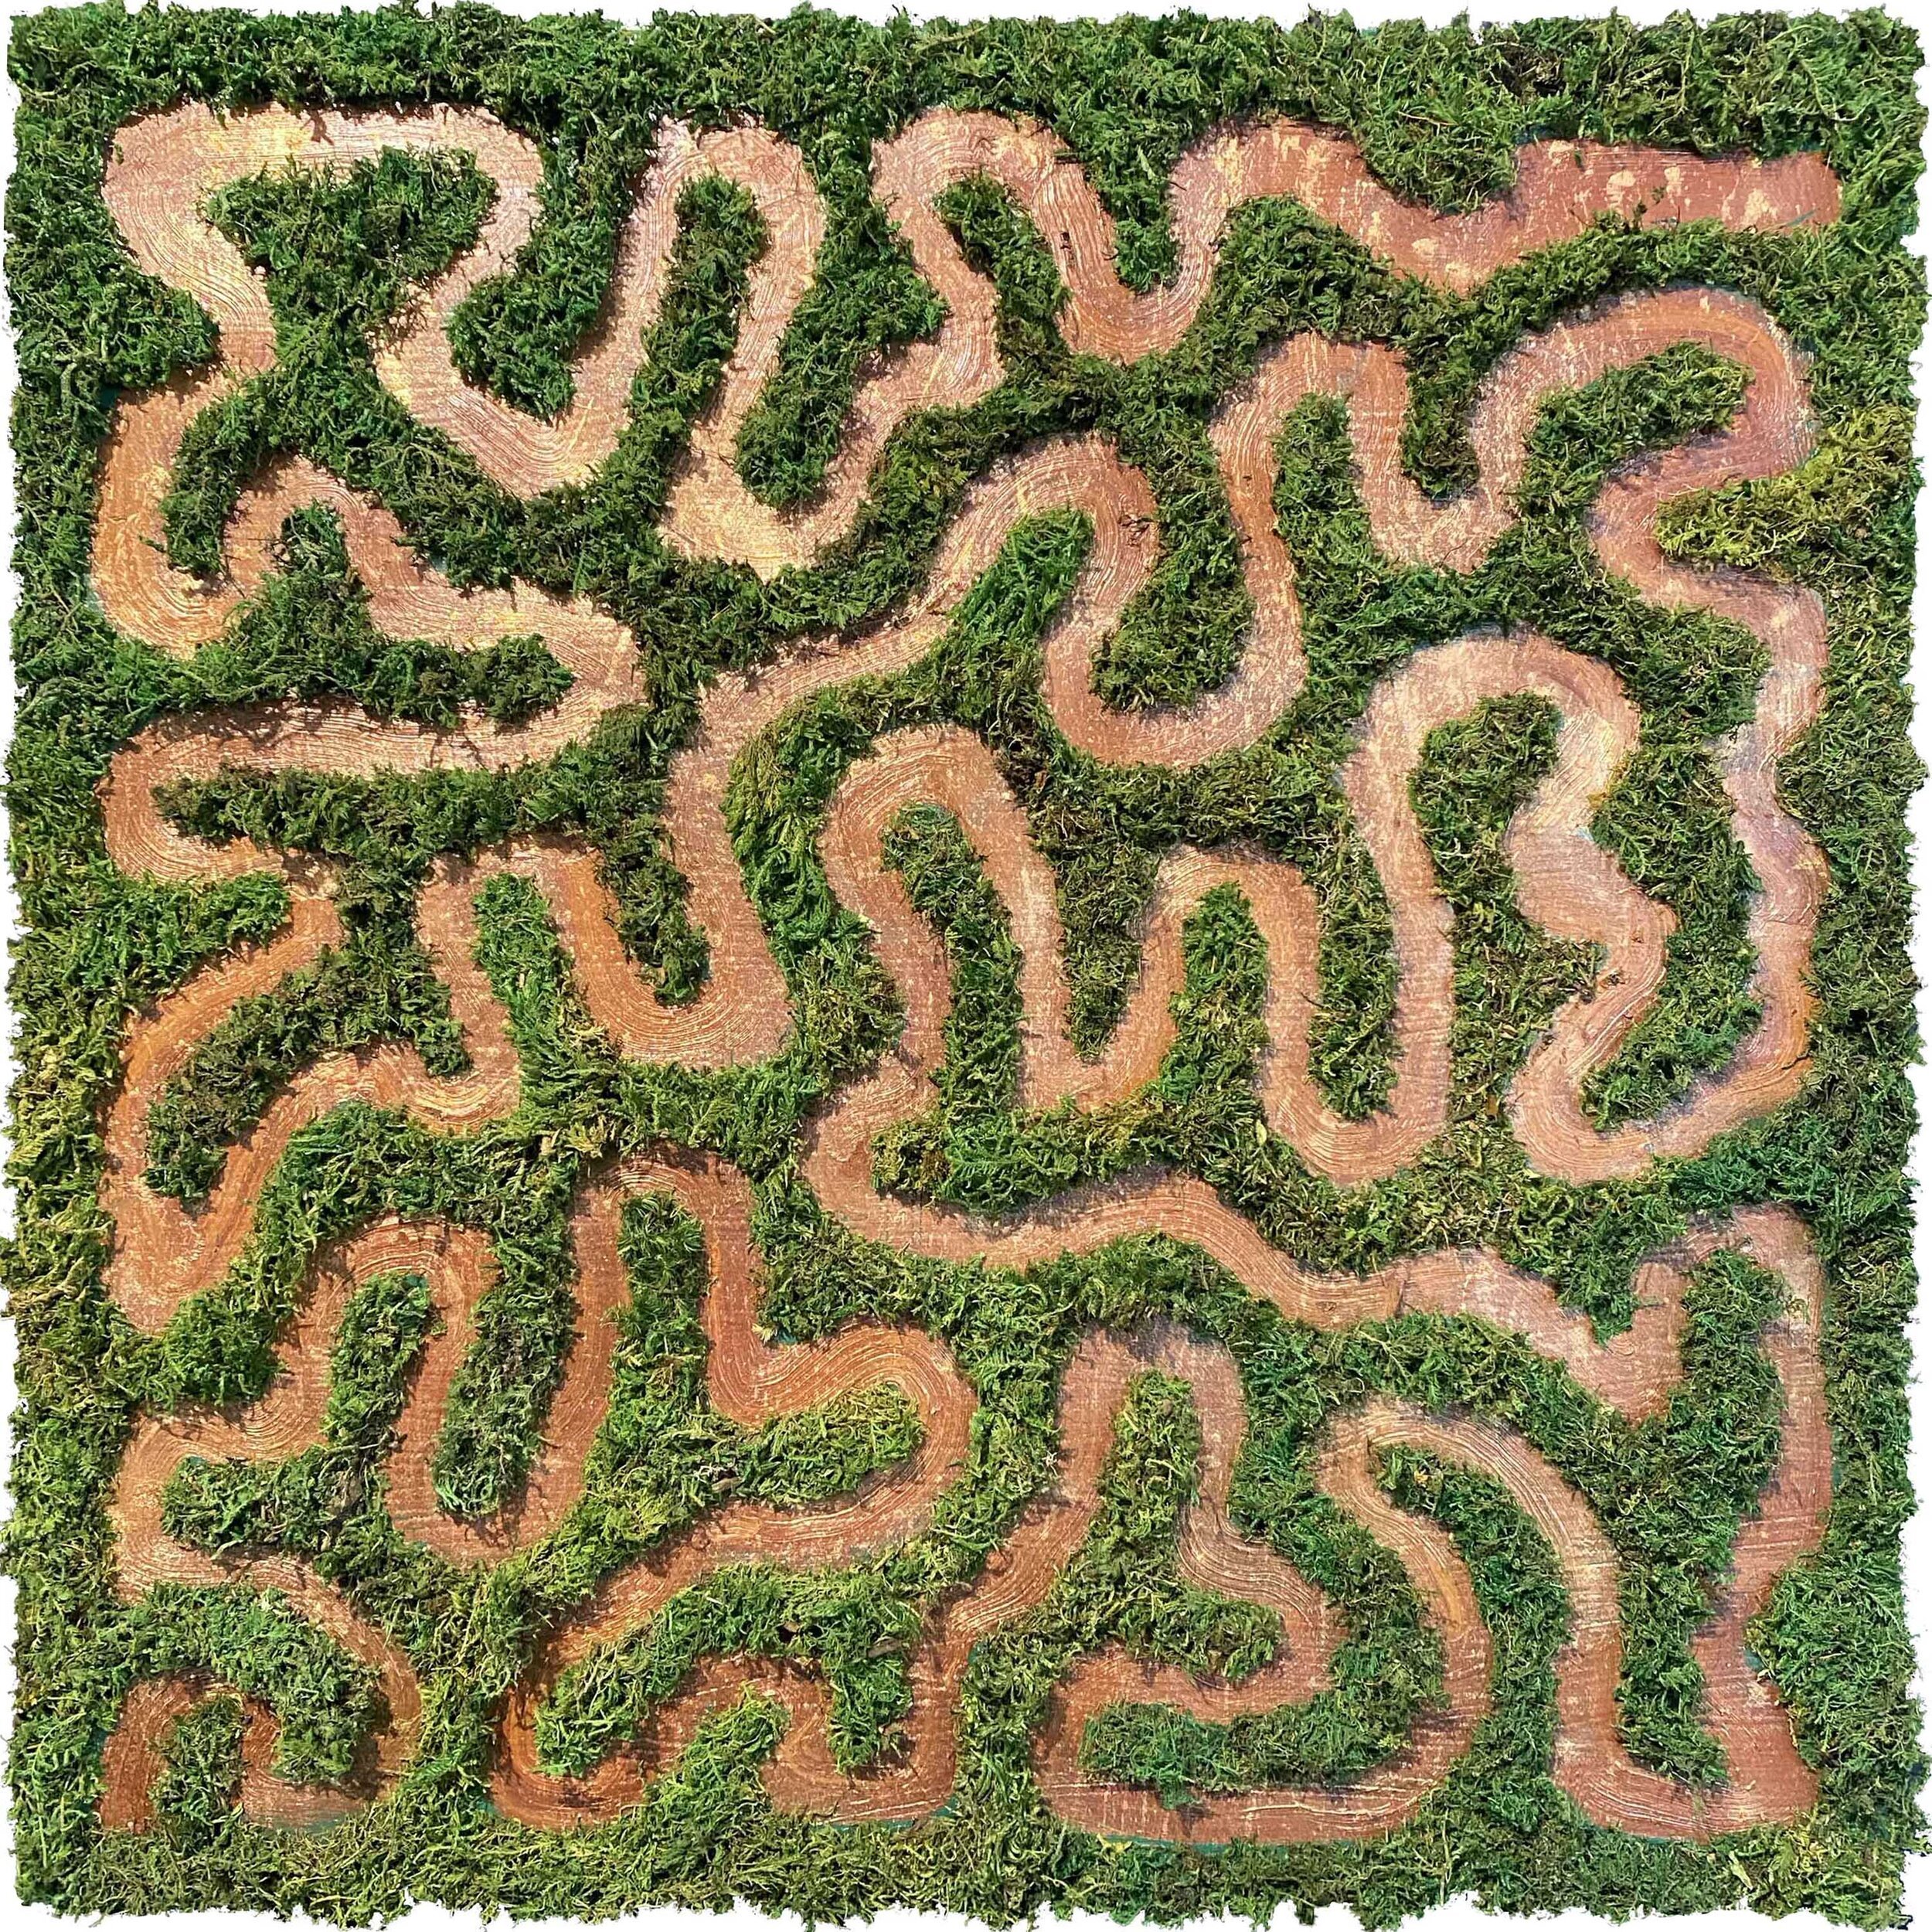 Moss+Labyrinth,+Daniel+Dugan+Art.jpg